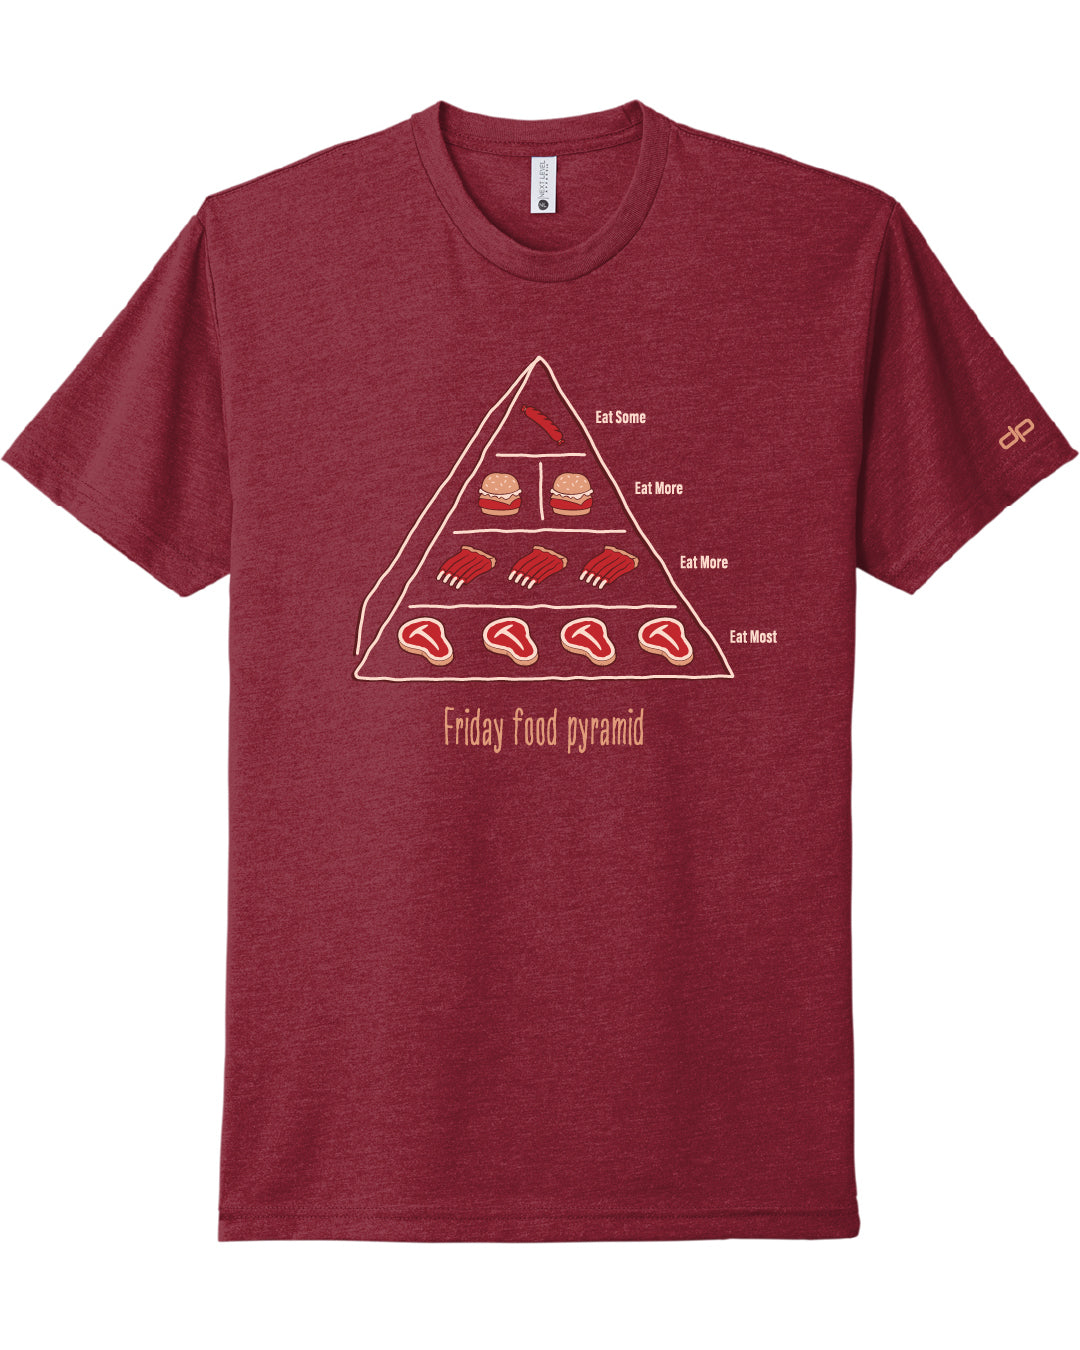 Meat Pyramid T-Shirt